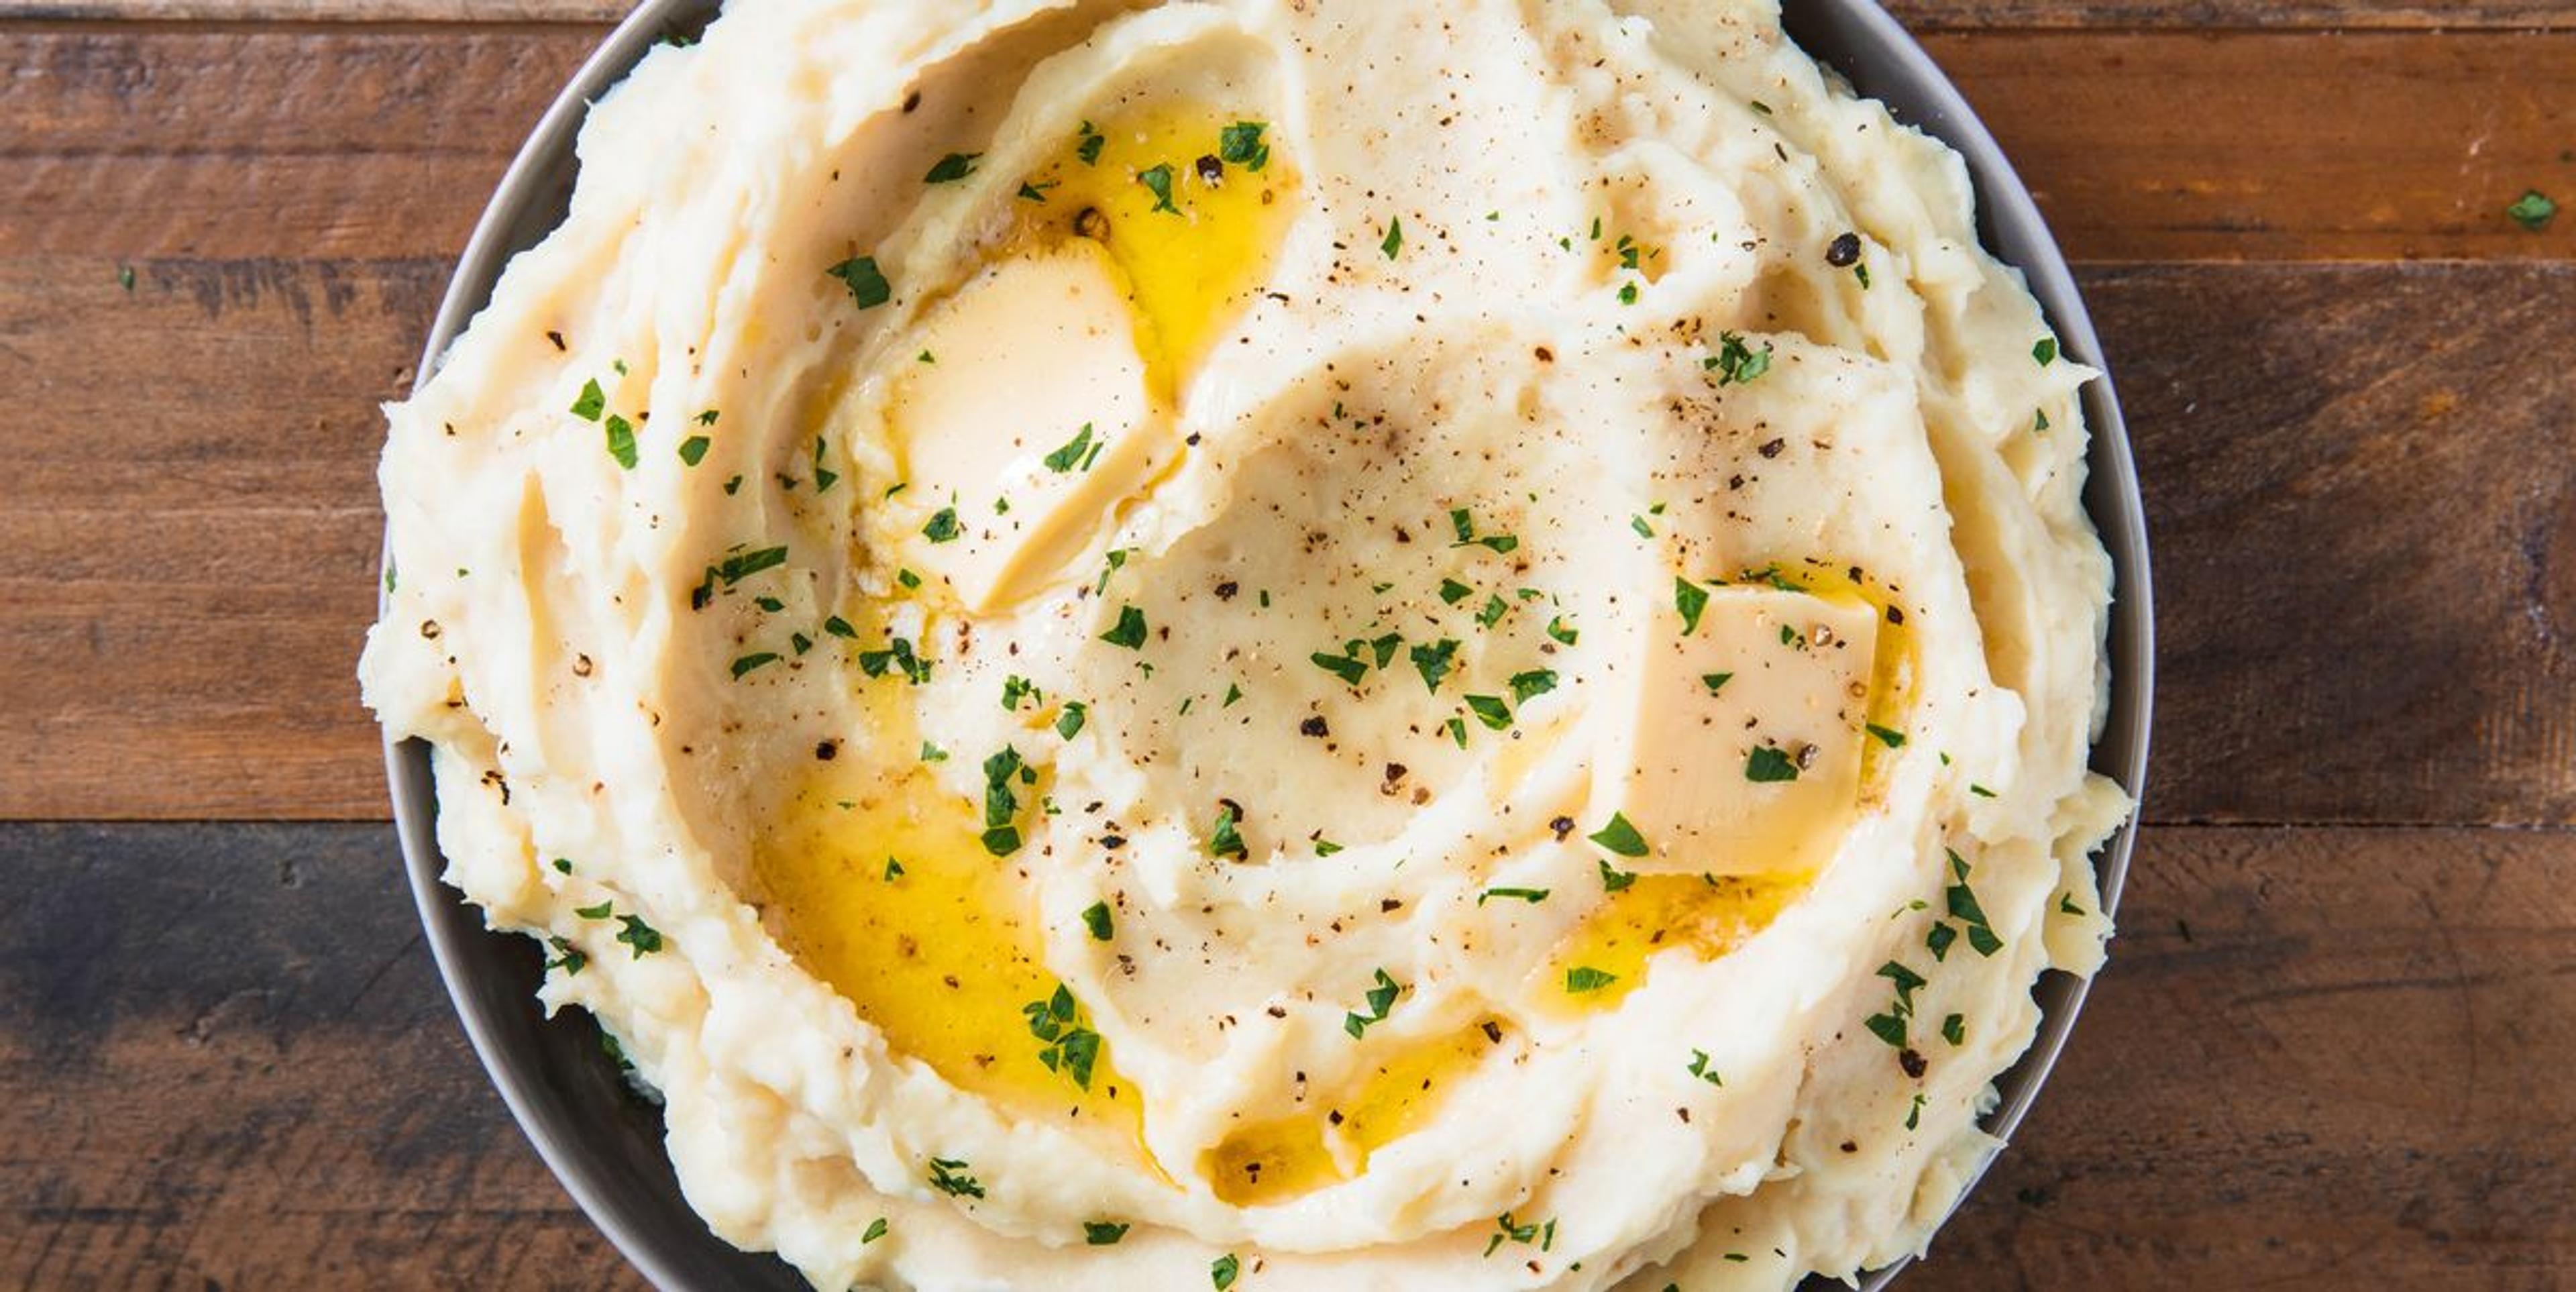 Best Mashed Potatoes Recipe - How to Make Mashed Potatoes